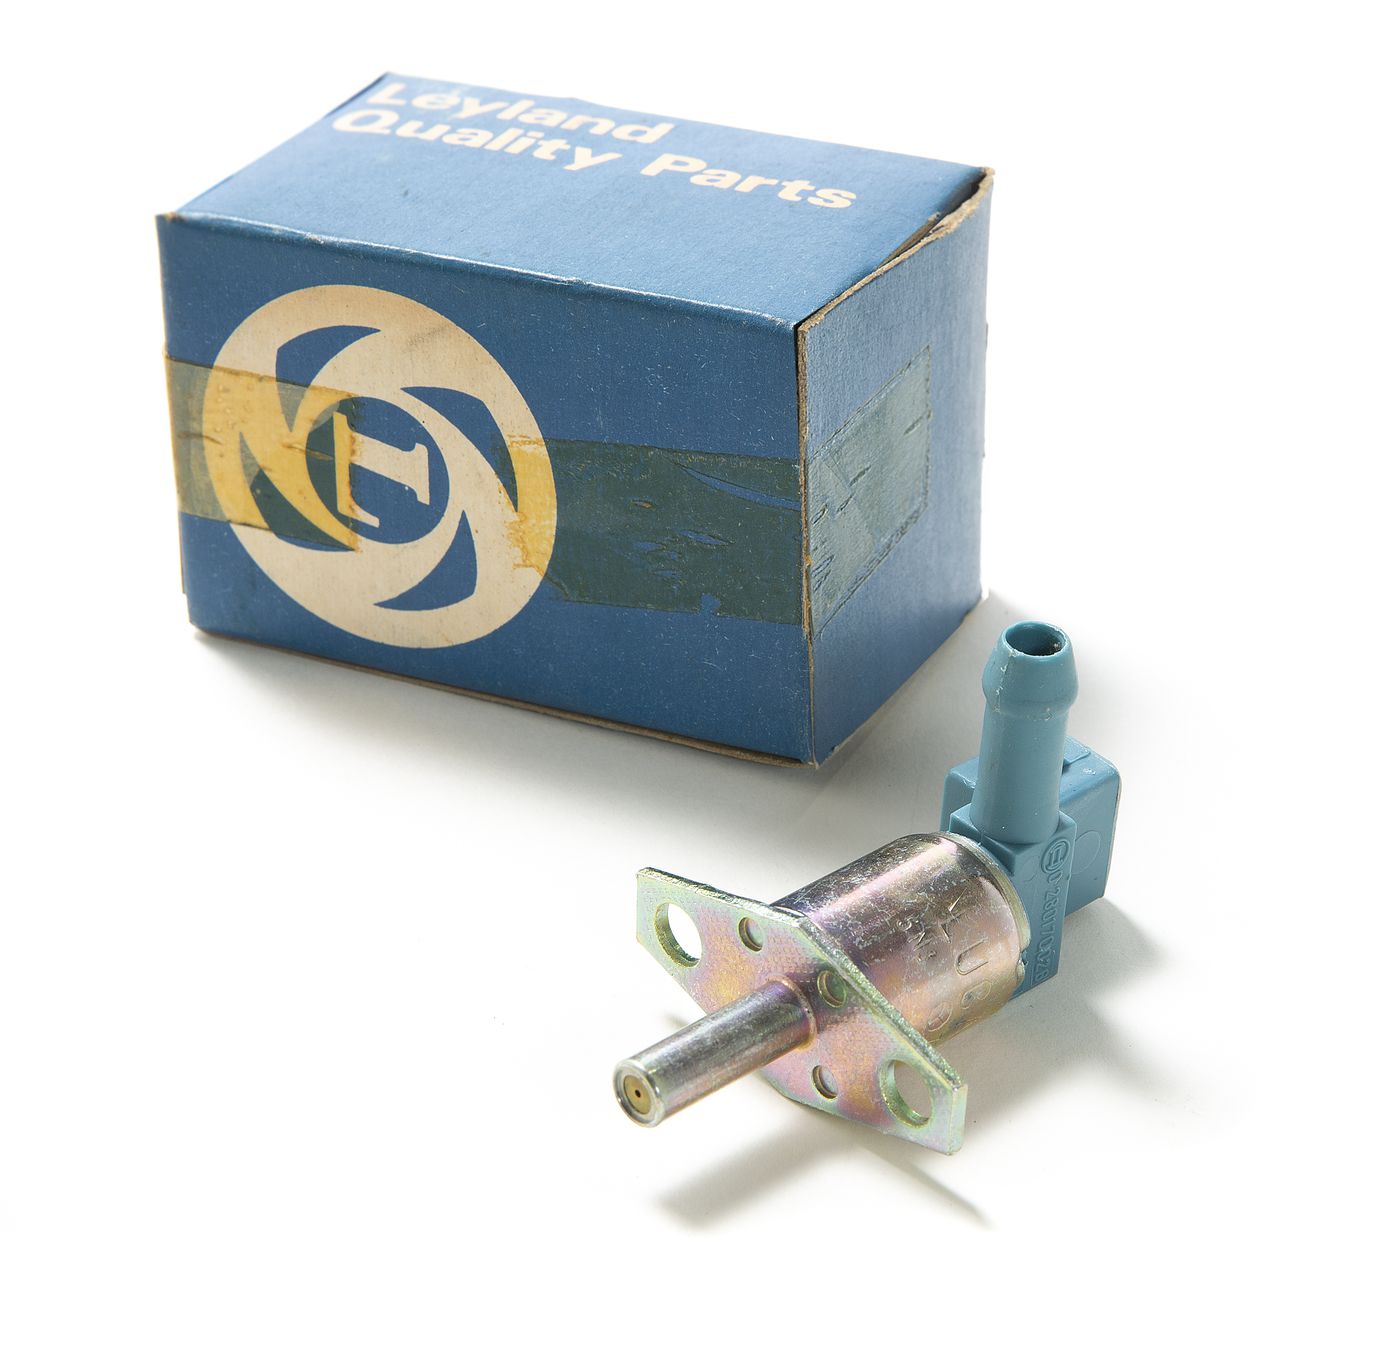 Einspritzdüse
Fuel injector
Injecteur
Inyector
Ugello di iniezi